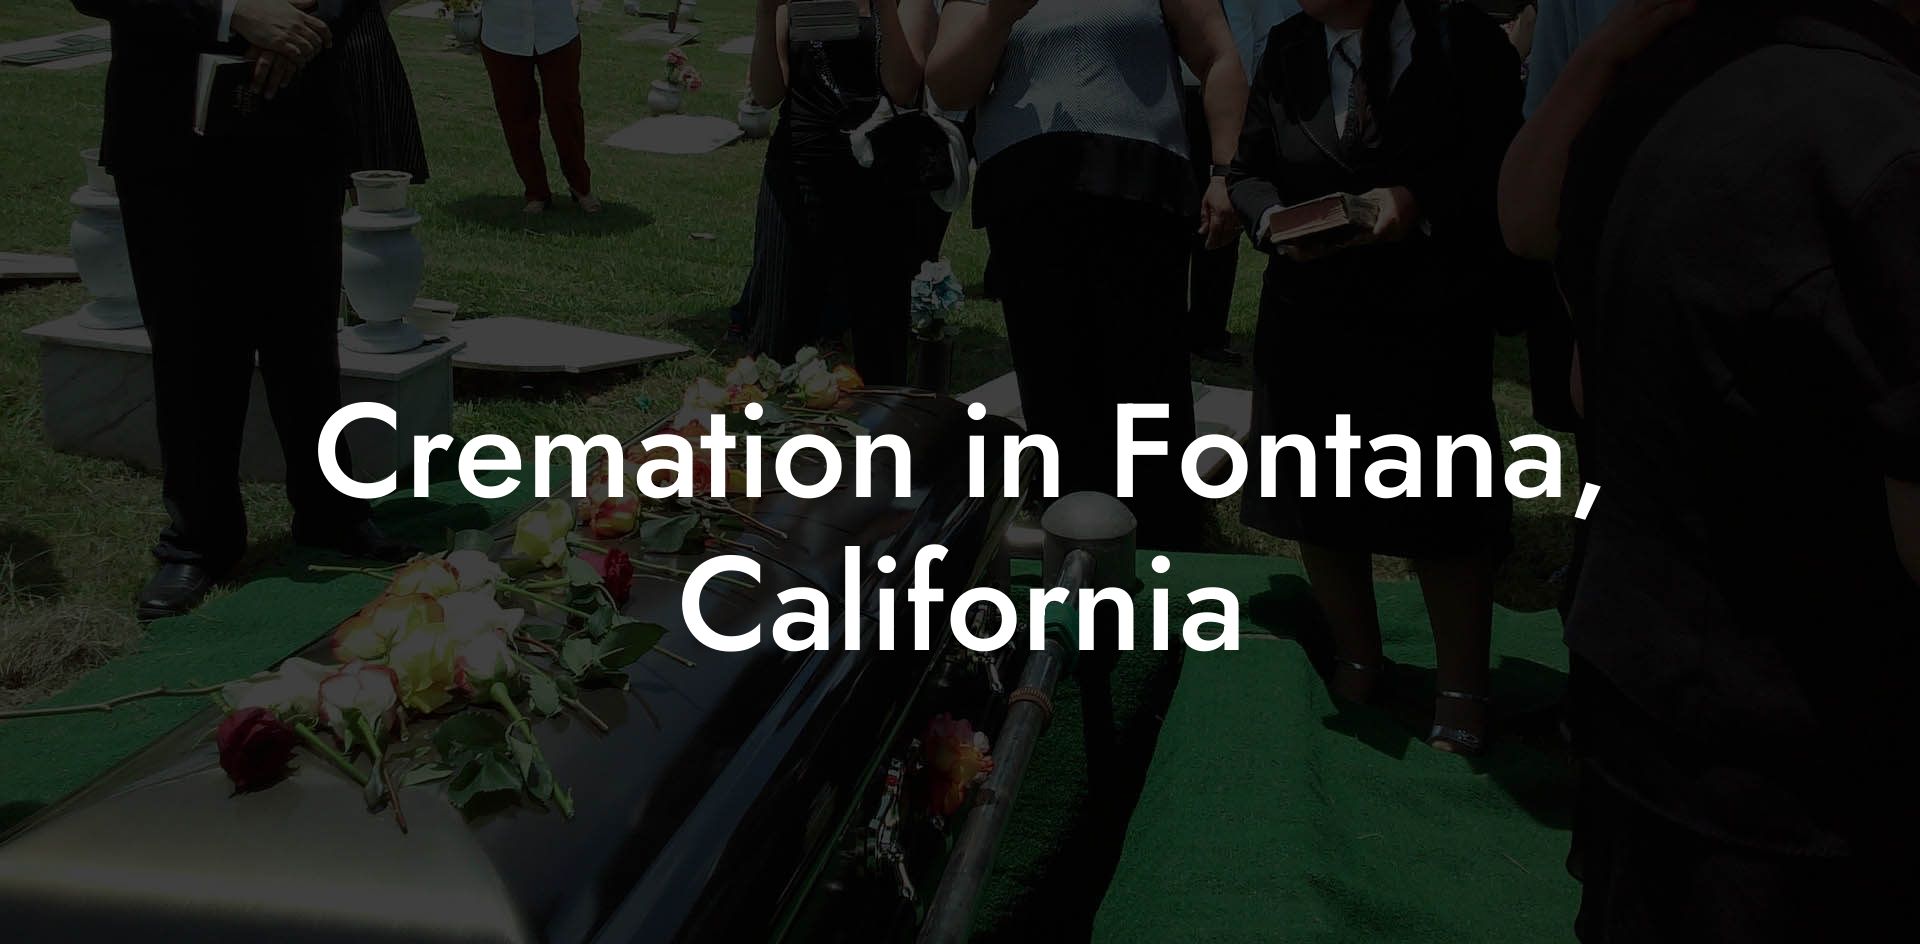 Cremation in Fontana, California